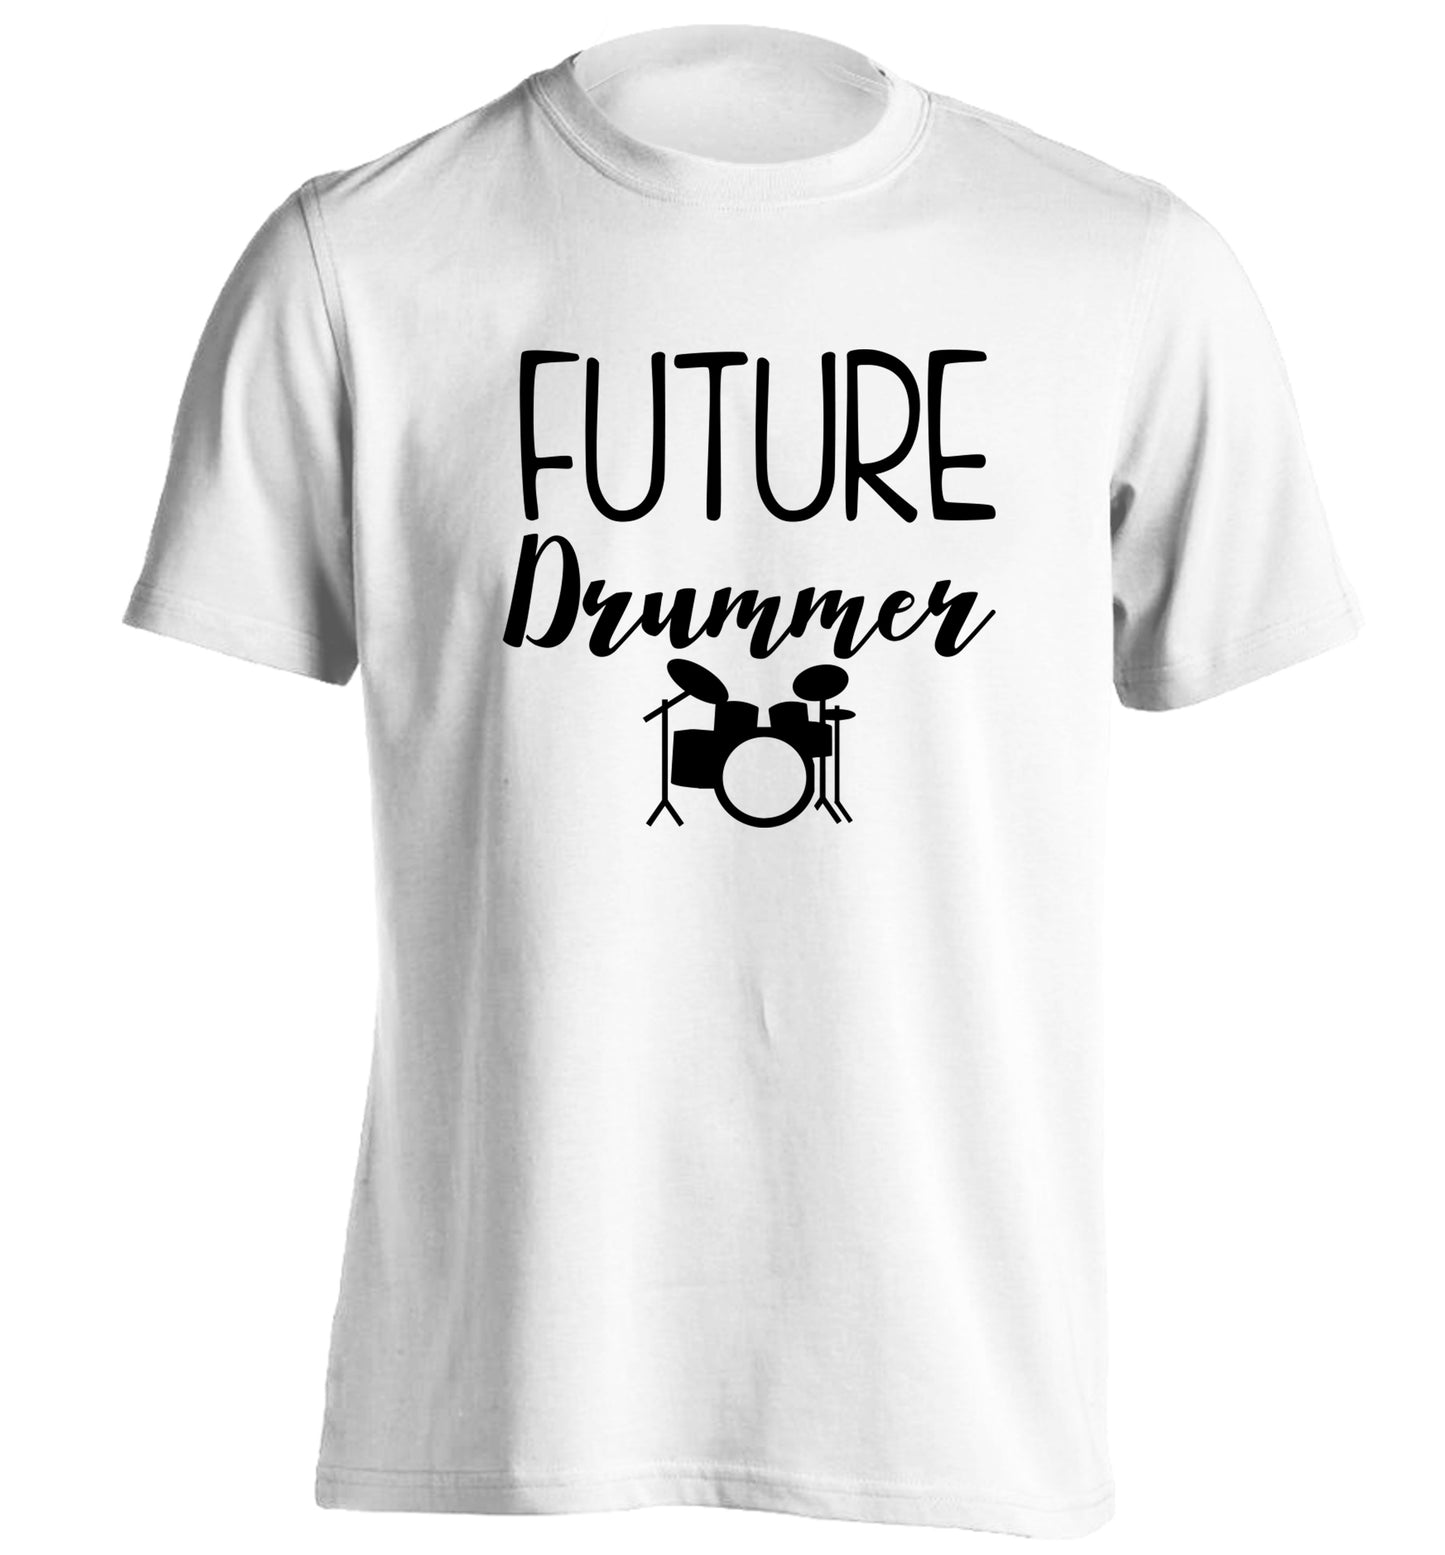 Future drummer adults unisex white Tshirt 2XL